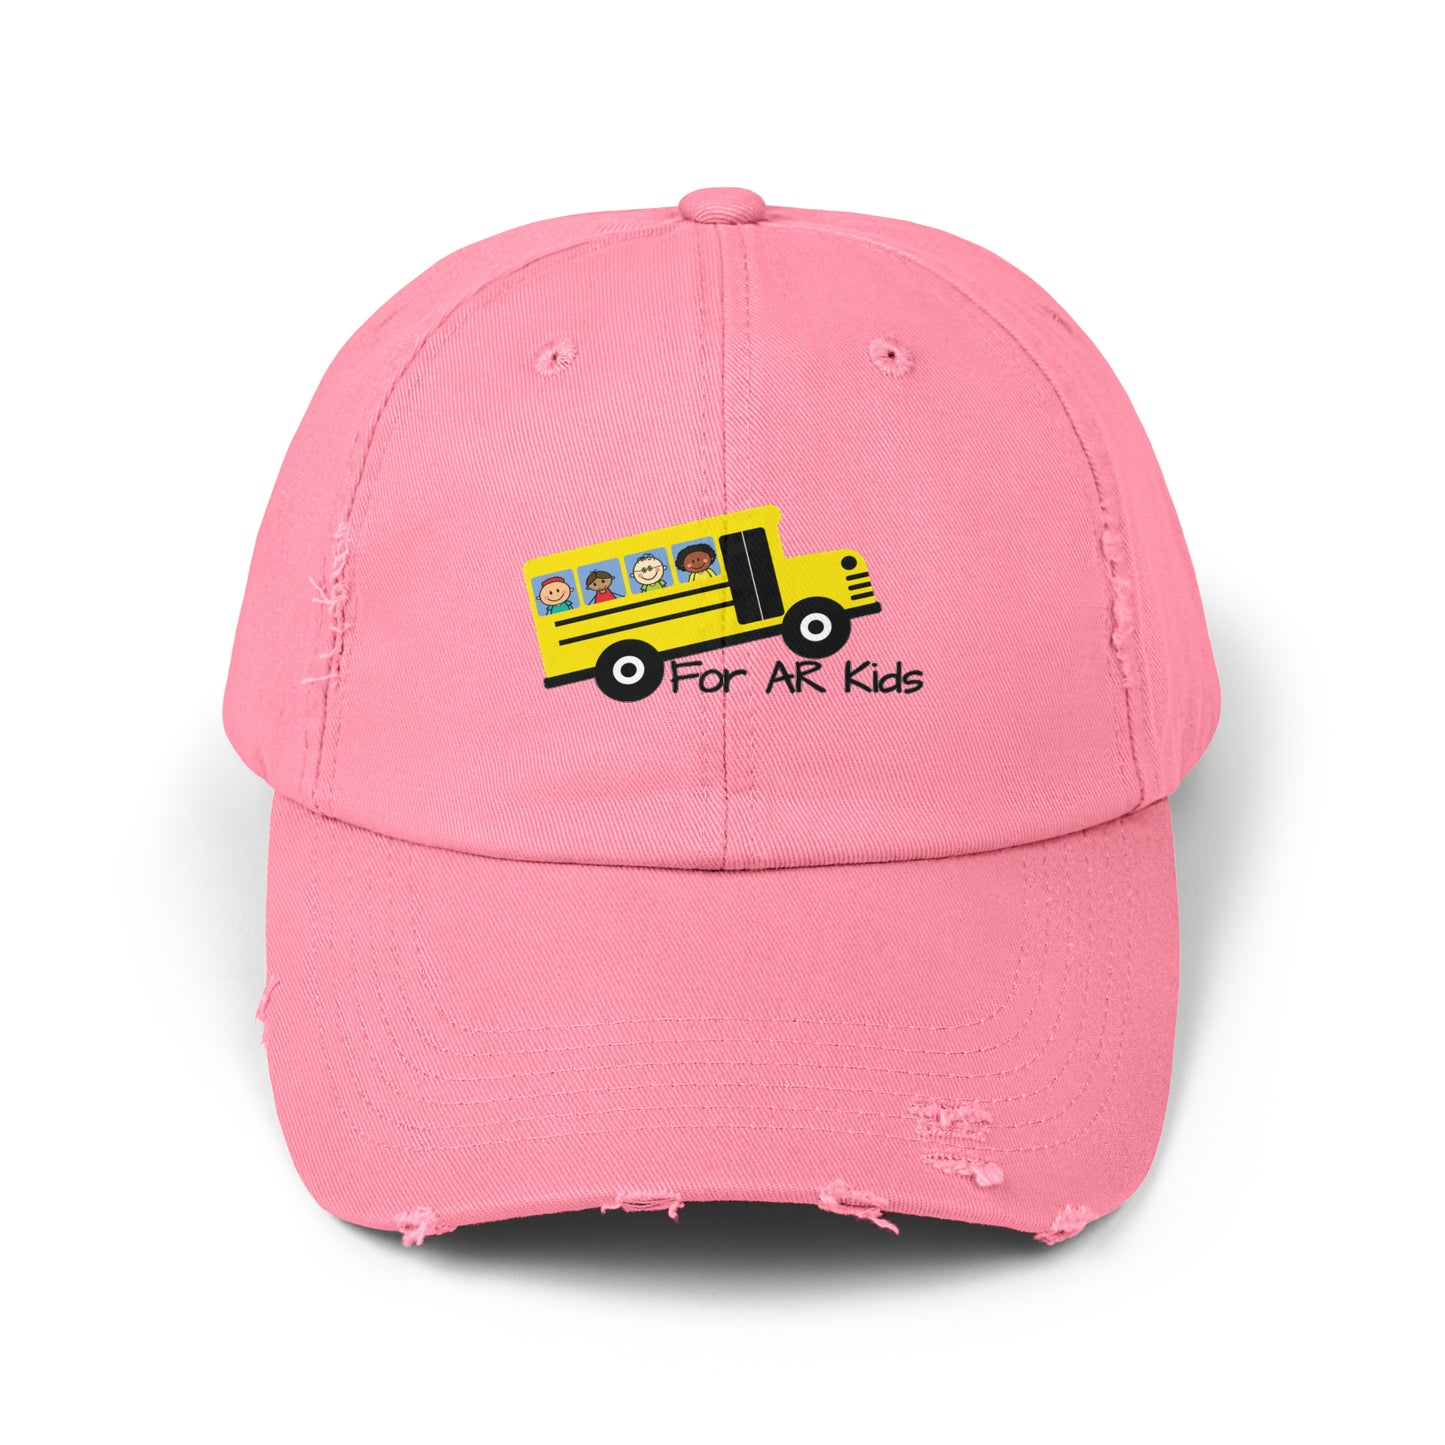 School Bus Baseball Cap, AR Kids Hat, Cute Children's Bus Cap, Distressed Cap